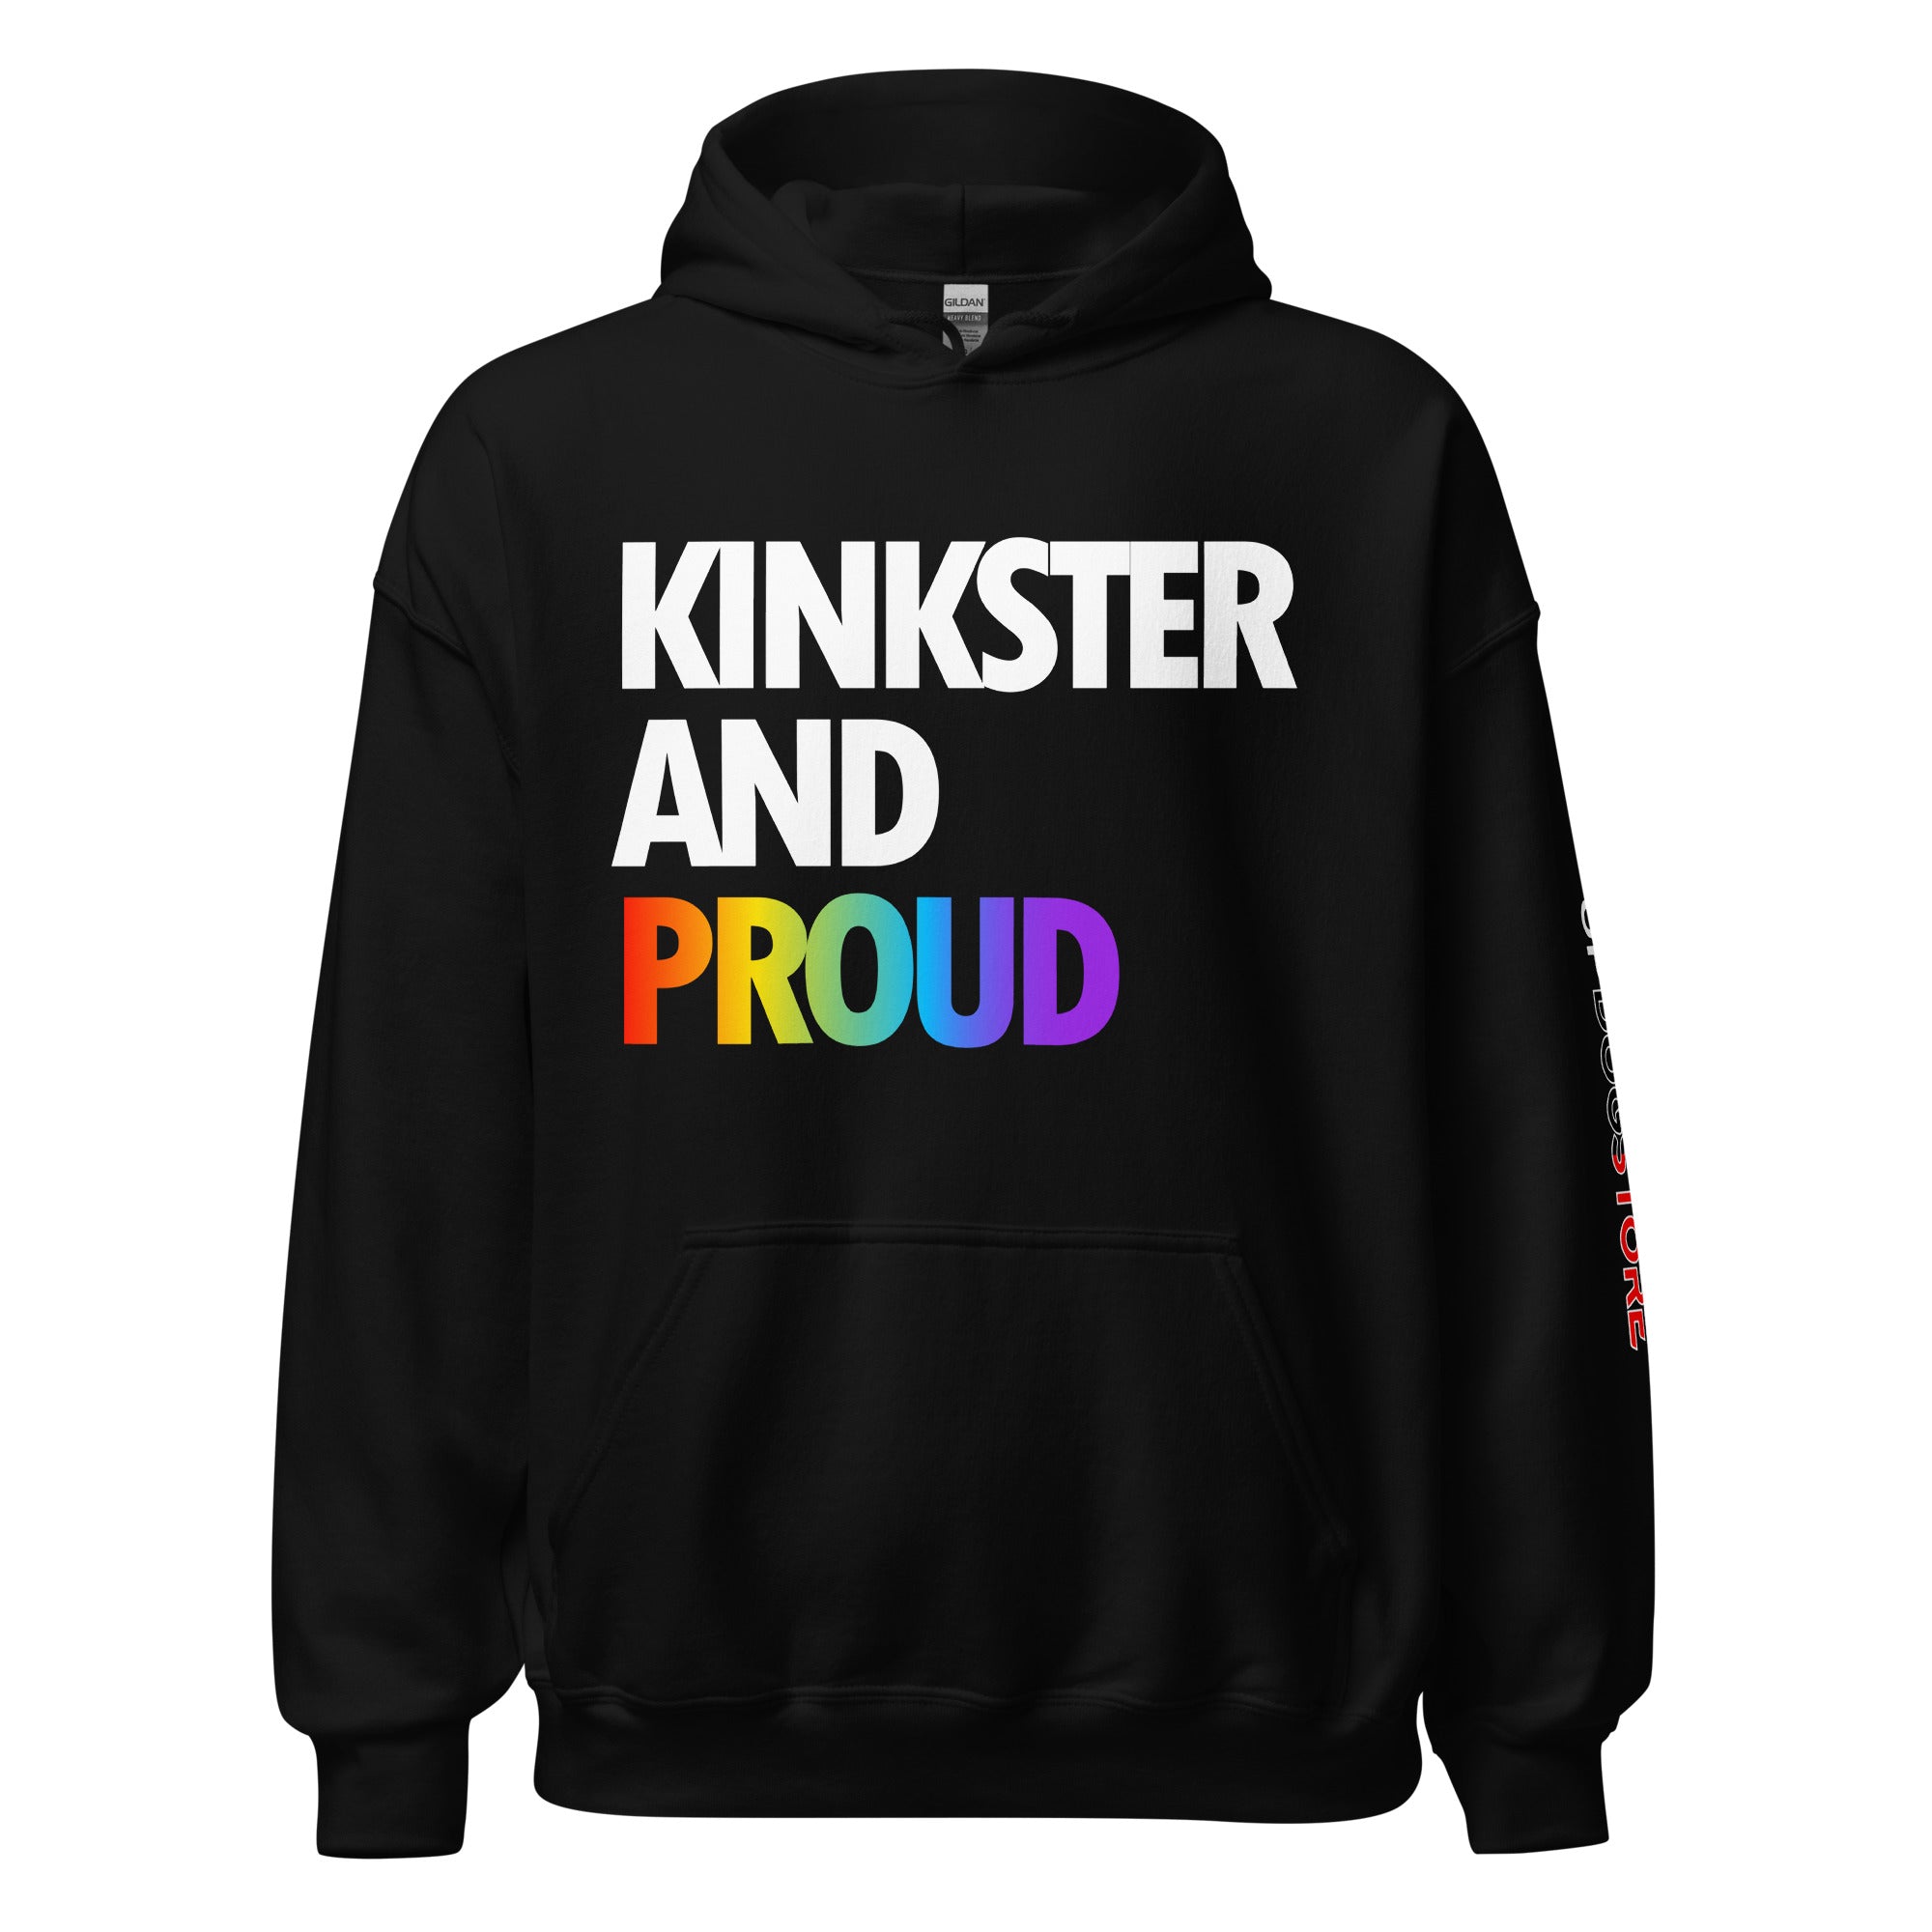 Kinkster and Proud / Hoodie